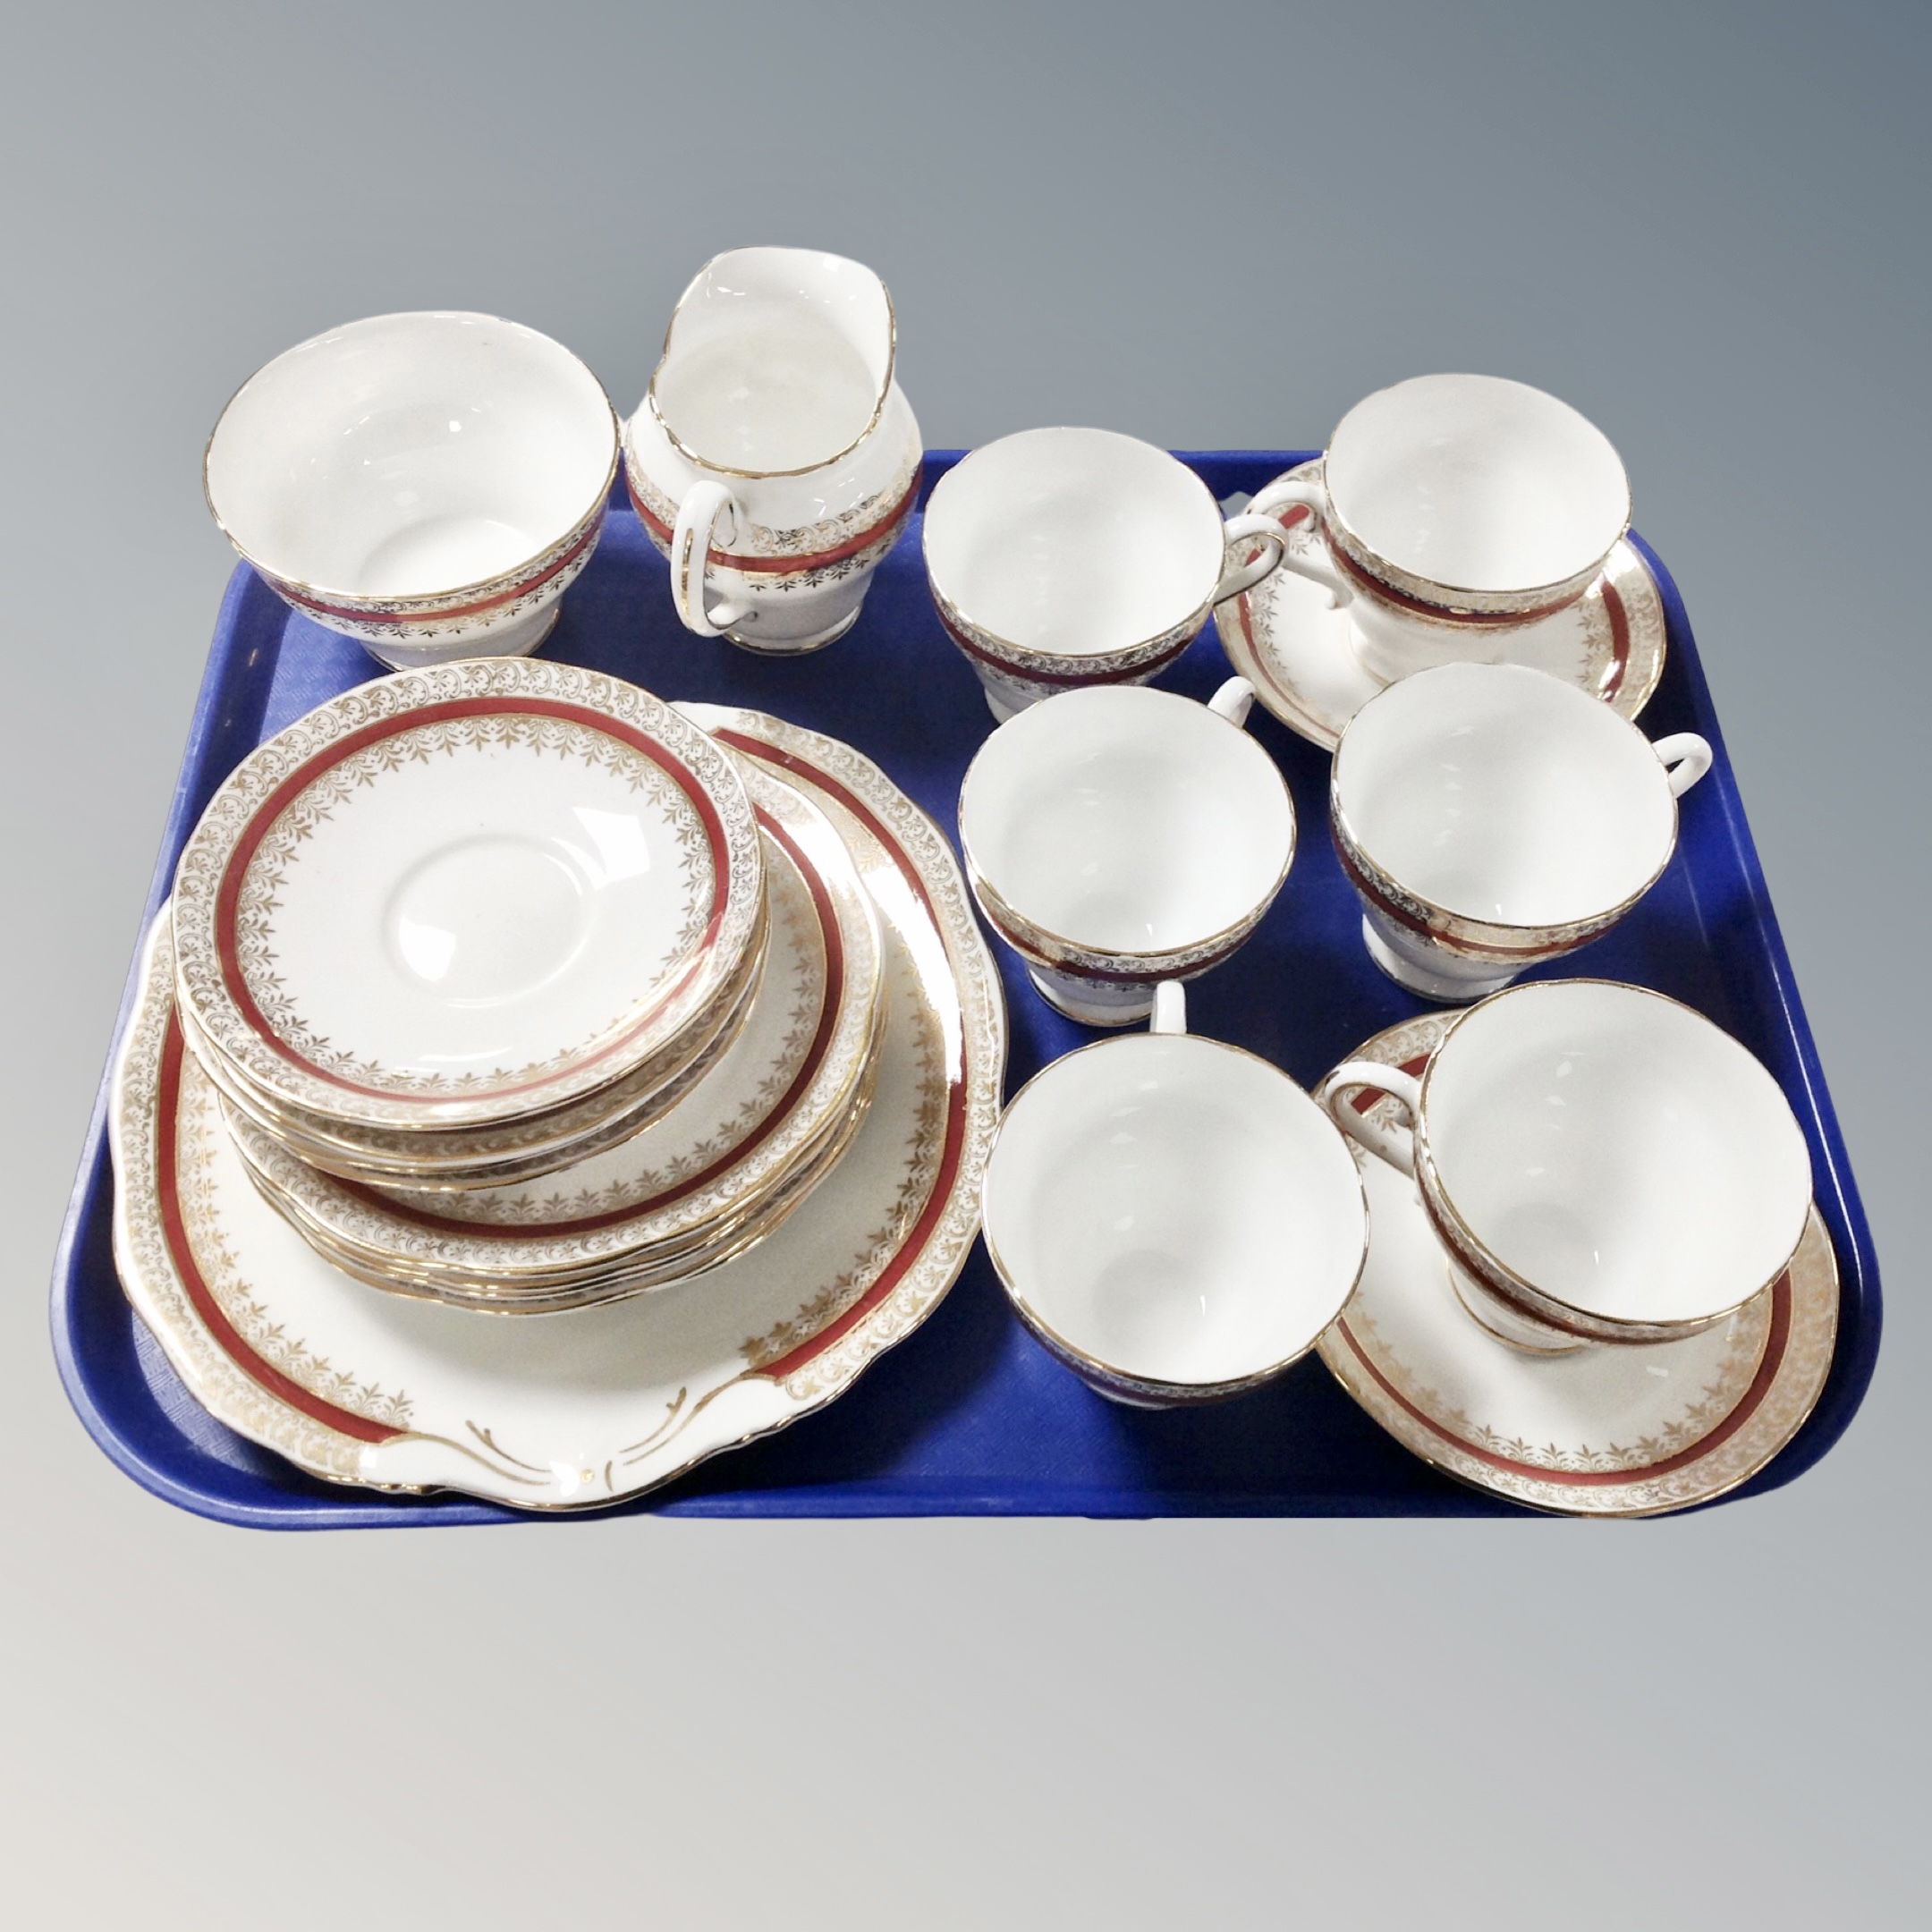 A tray containing a Salisbury bone china tea set.